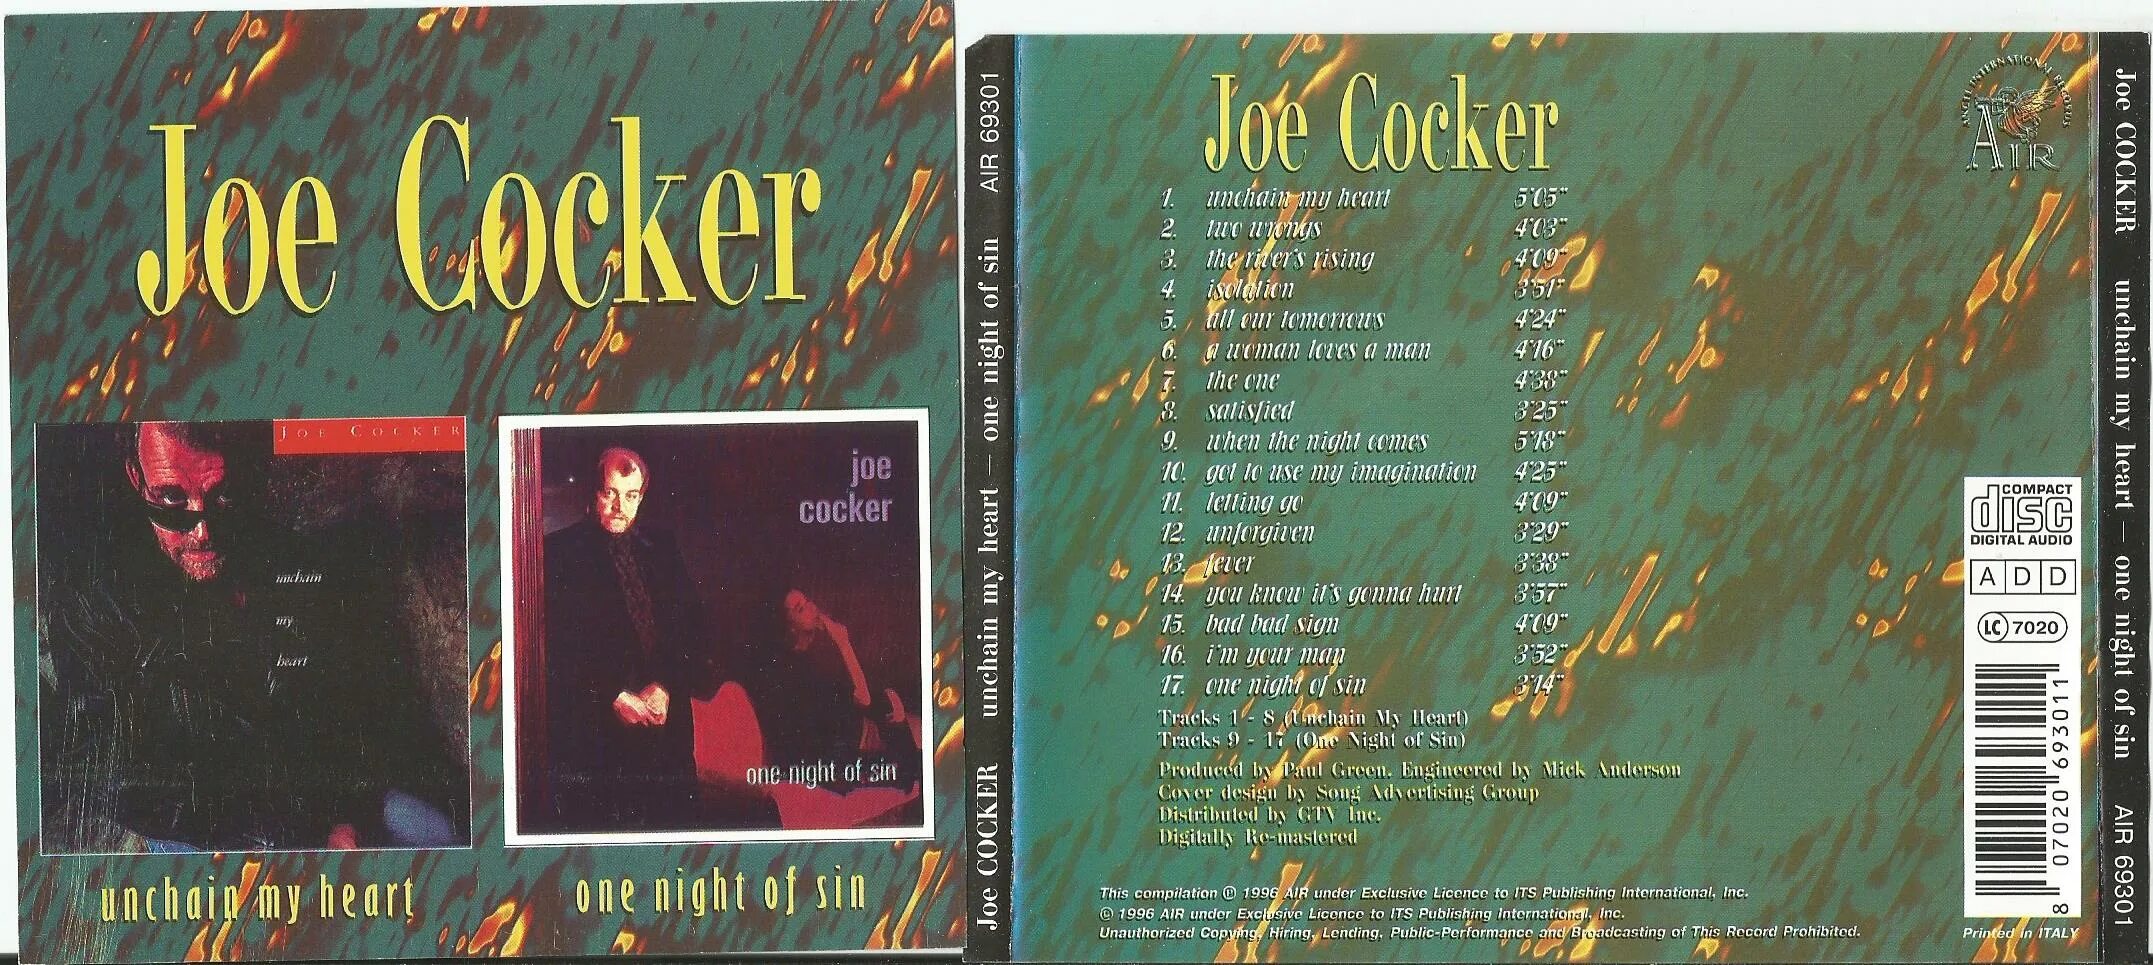 Joe cocker unchain my heart. Joe Cocker 1989. Joe Cocker one Night of sin. «Joe Cocker» 2002' "Unchain my Heart". Joe Cocker фото 1989.